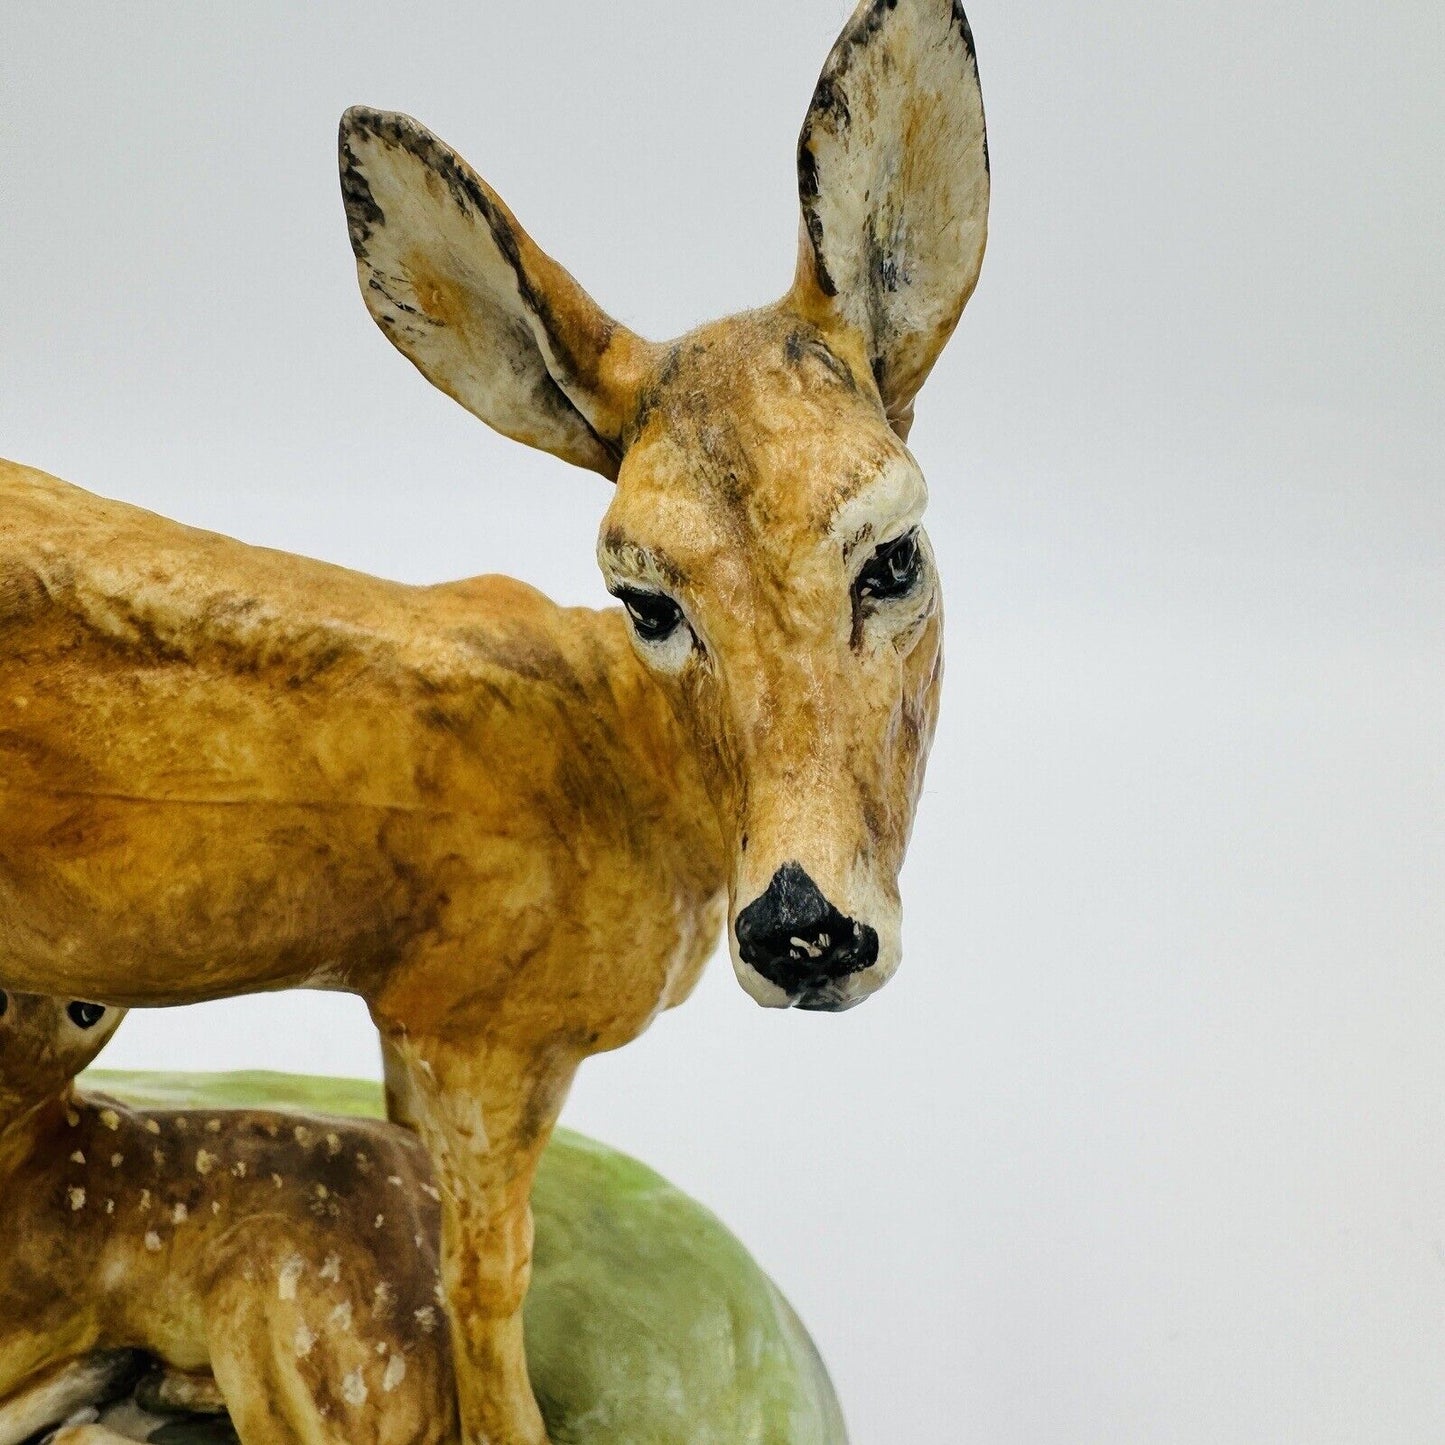 Vintage Spanish Ceramic Hand Painted Deer Figurine Porcelain 7”